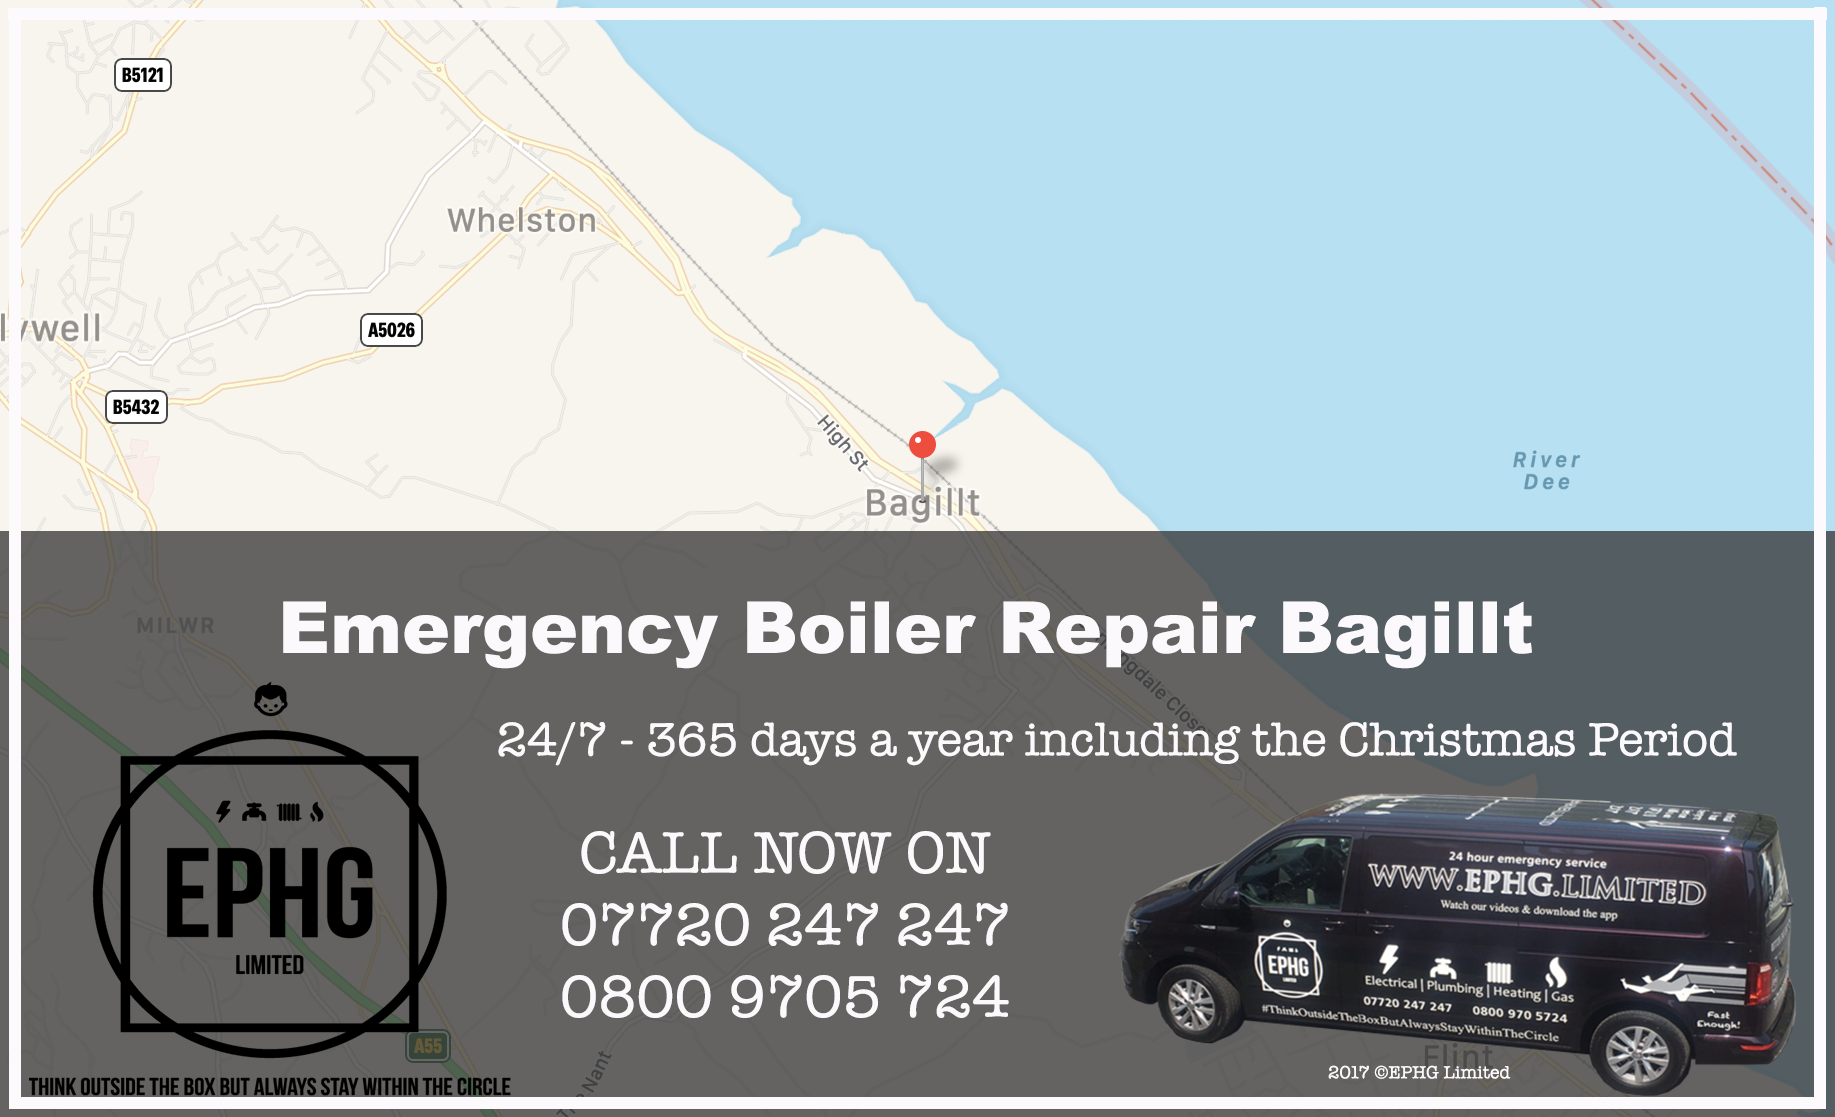 24 Hour Emergency Boiler Repair Bagillt